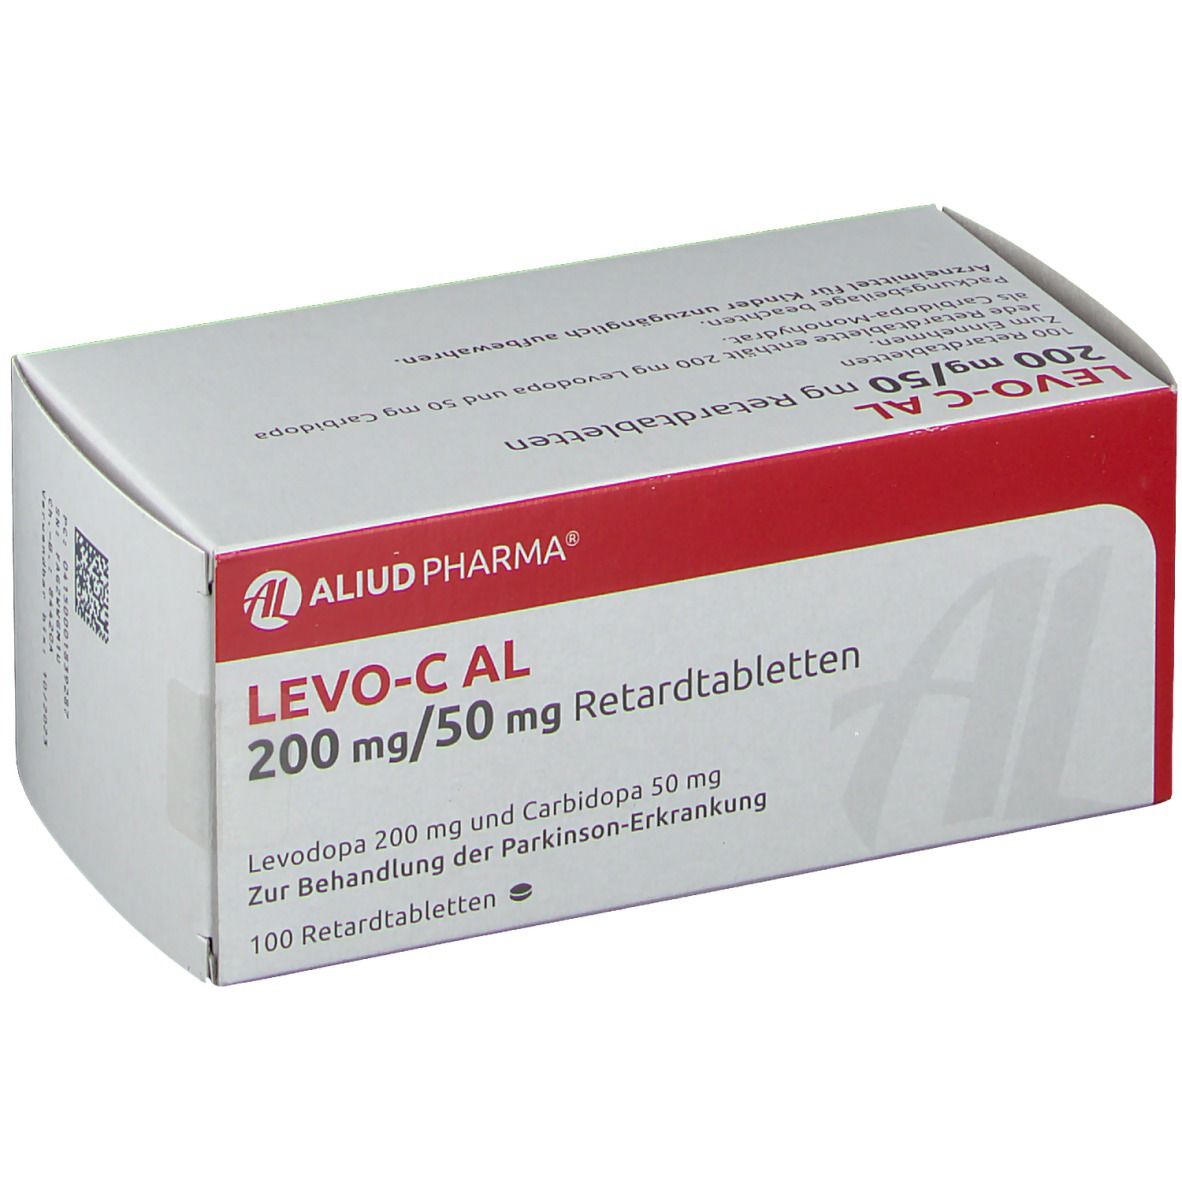 Levo-C AL 200 mg/50 mg